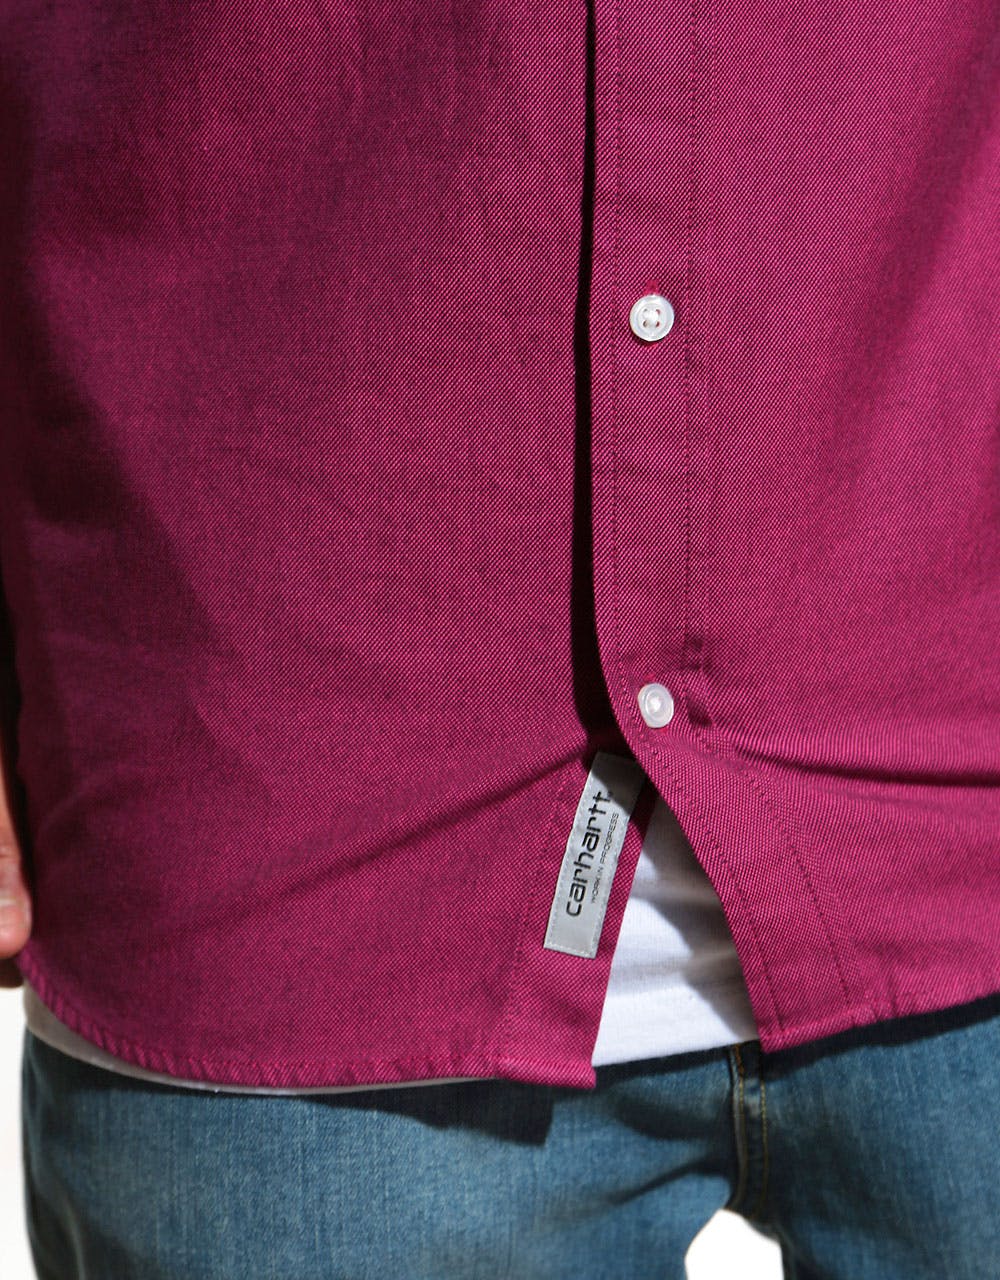 Carhartt WIP L/S Dalton Shirt - Ruby Pink (Heavy Rinsed)